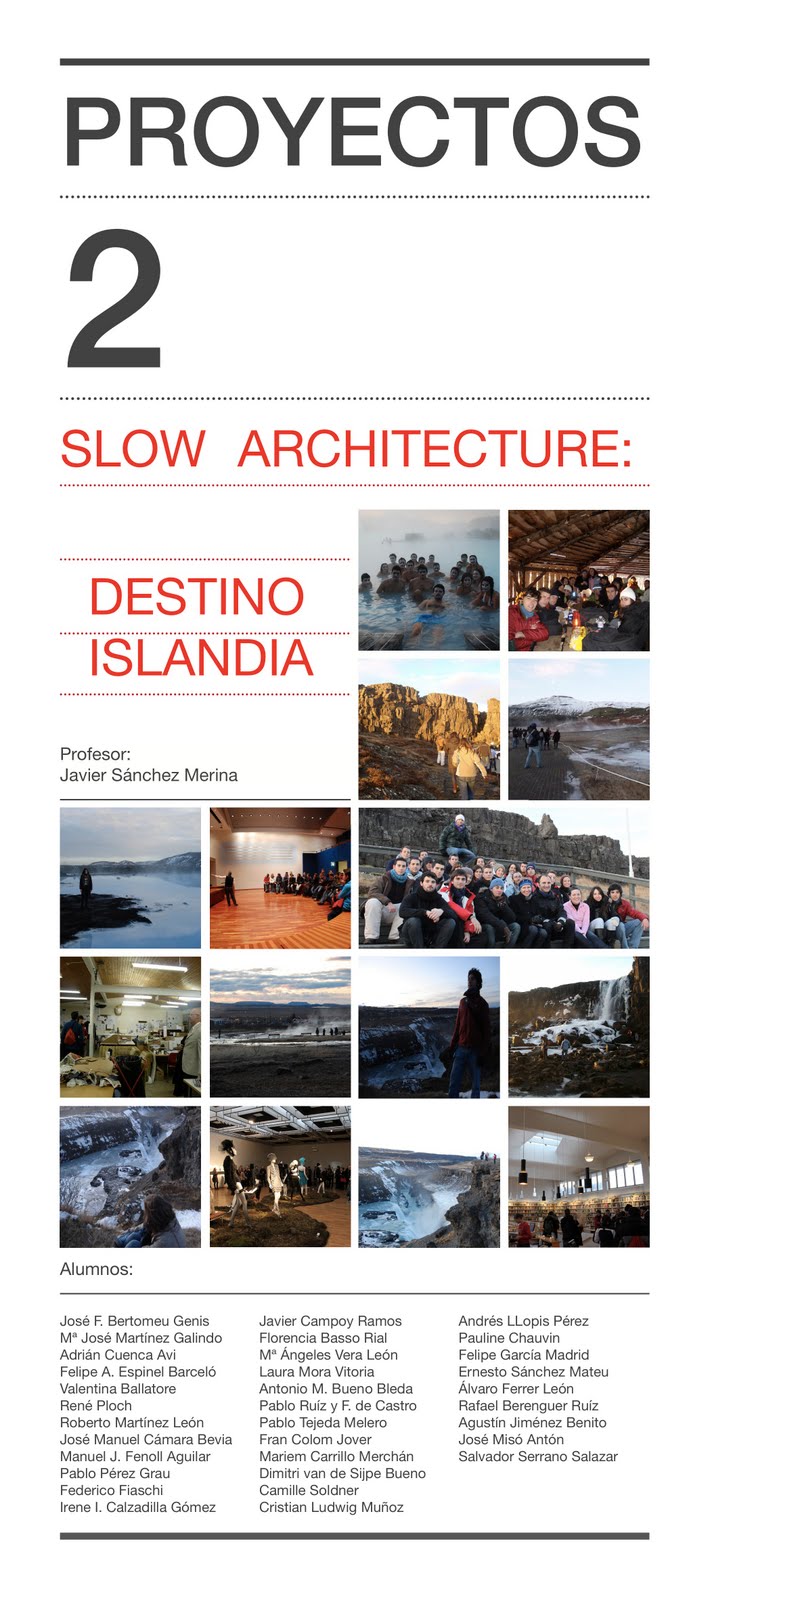 DESTINO ISLANDIA / Arquitectura y Paisaje